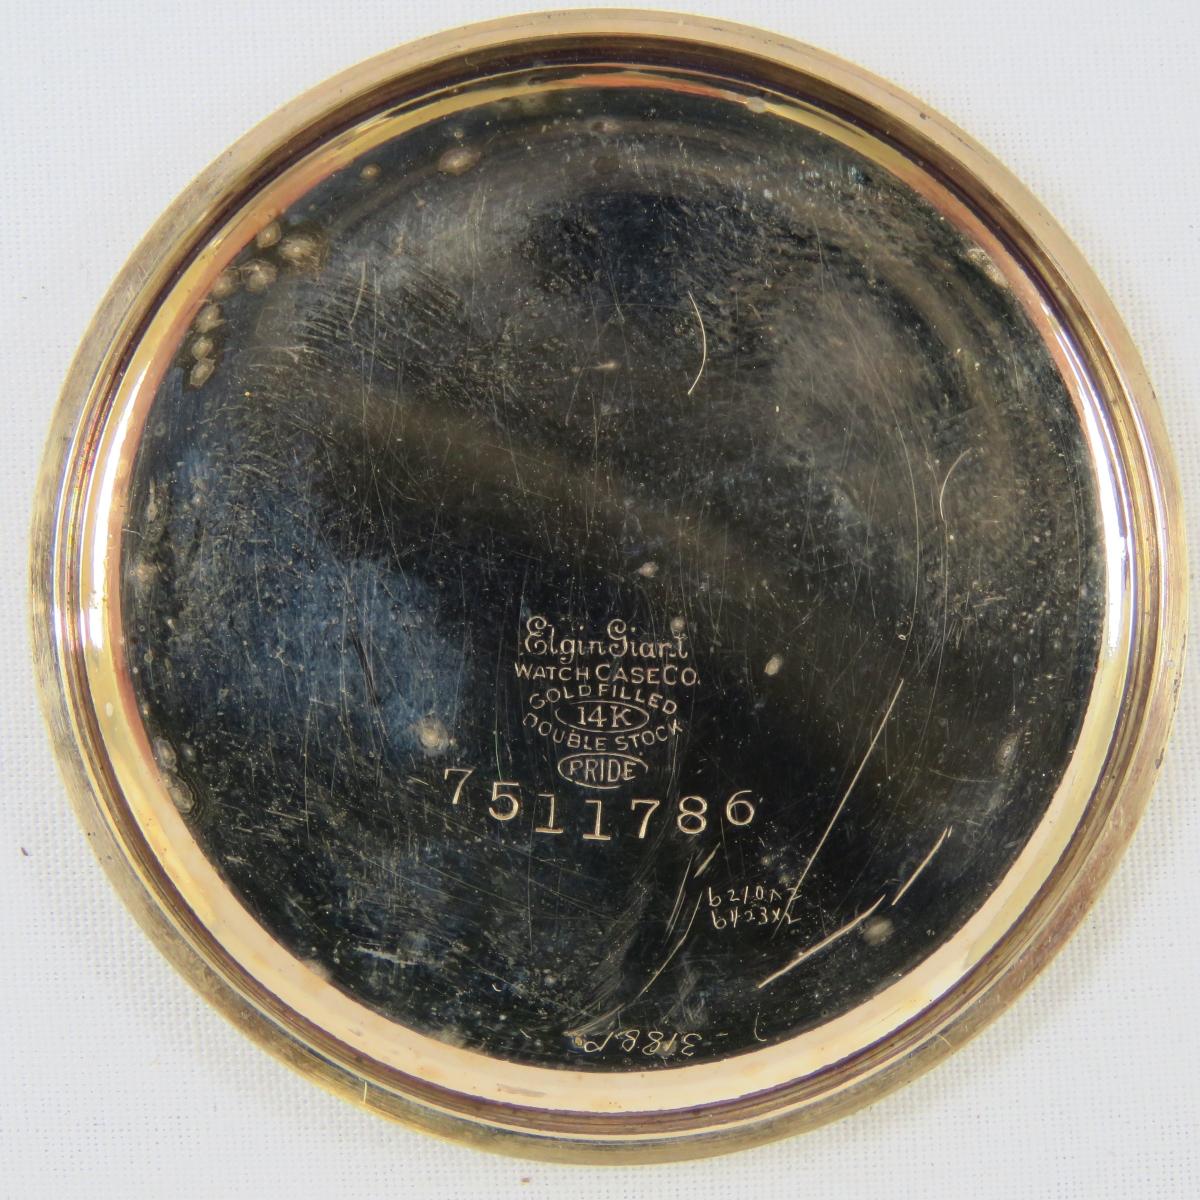 1926 South Bend Grade 411 Pocket Watch